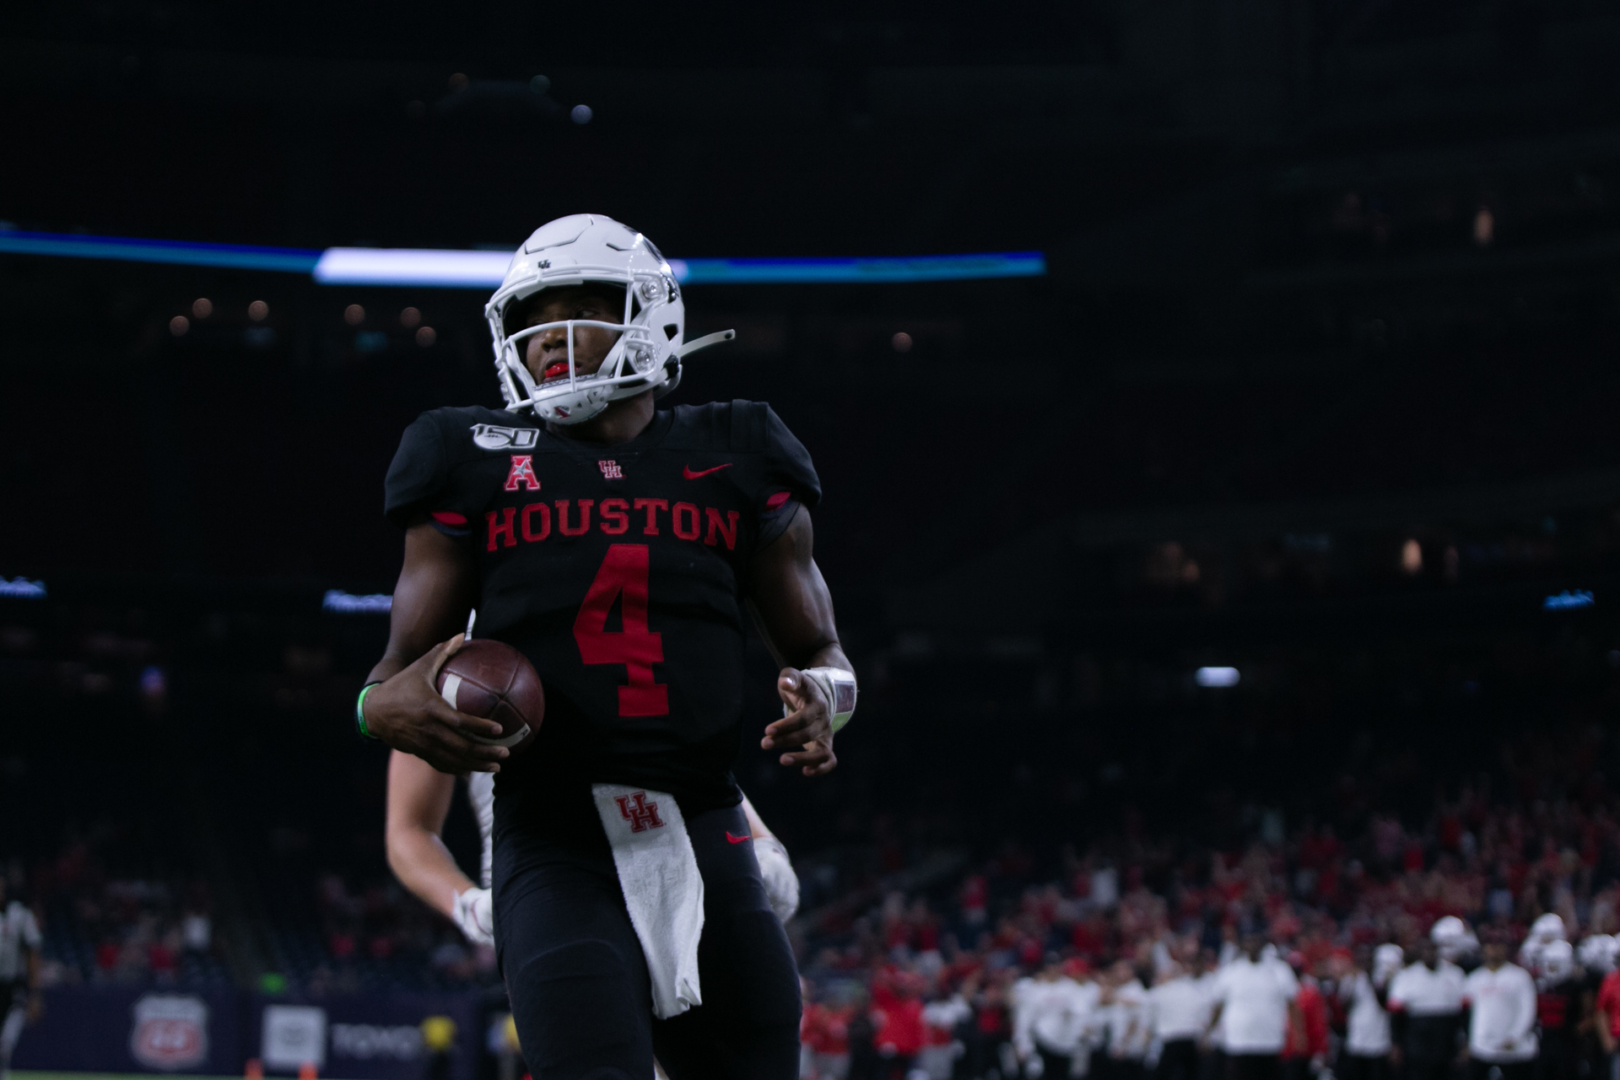 Senior quarterback D'Eriq King rushed for two touchdowns in Houston's loss. | Kathryn Lenihan/The Cougar